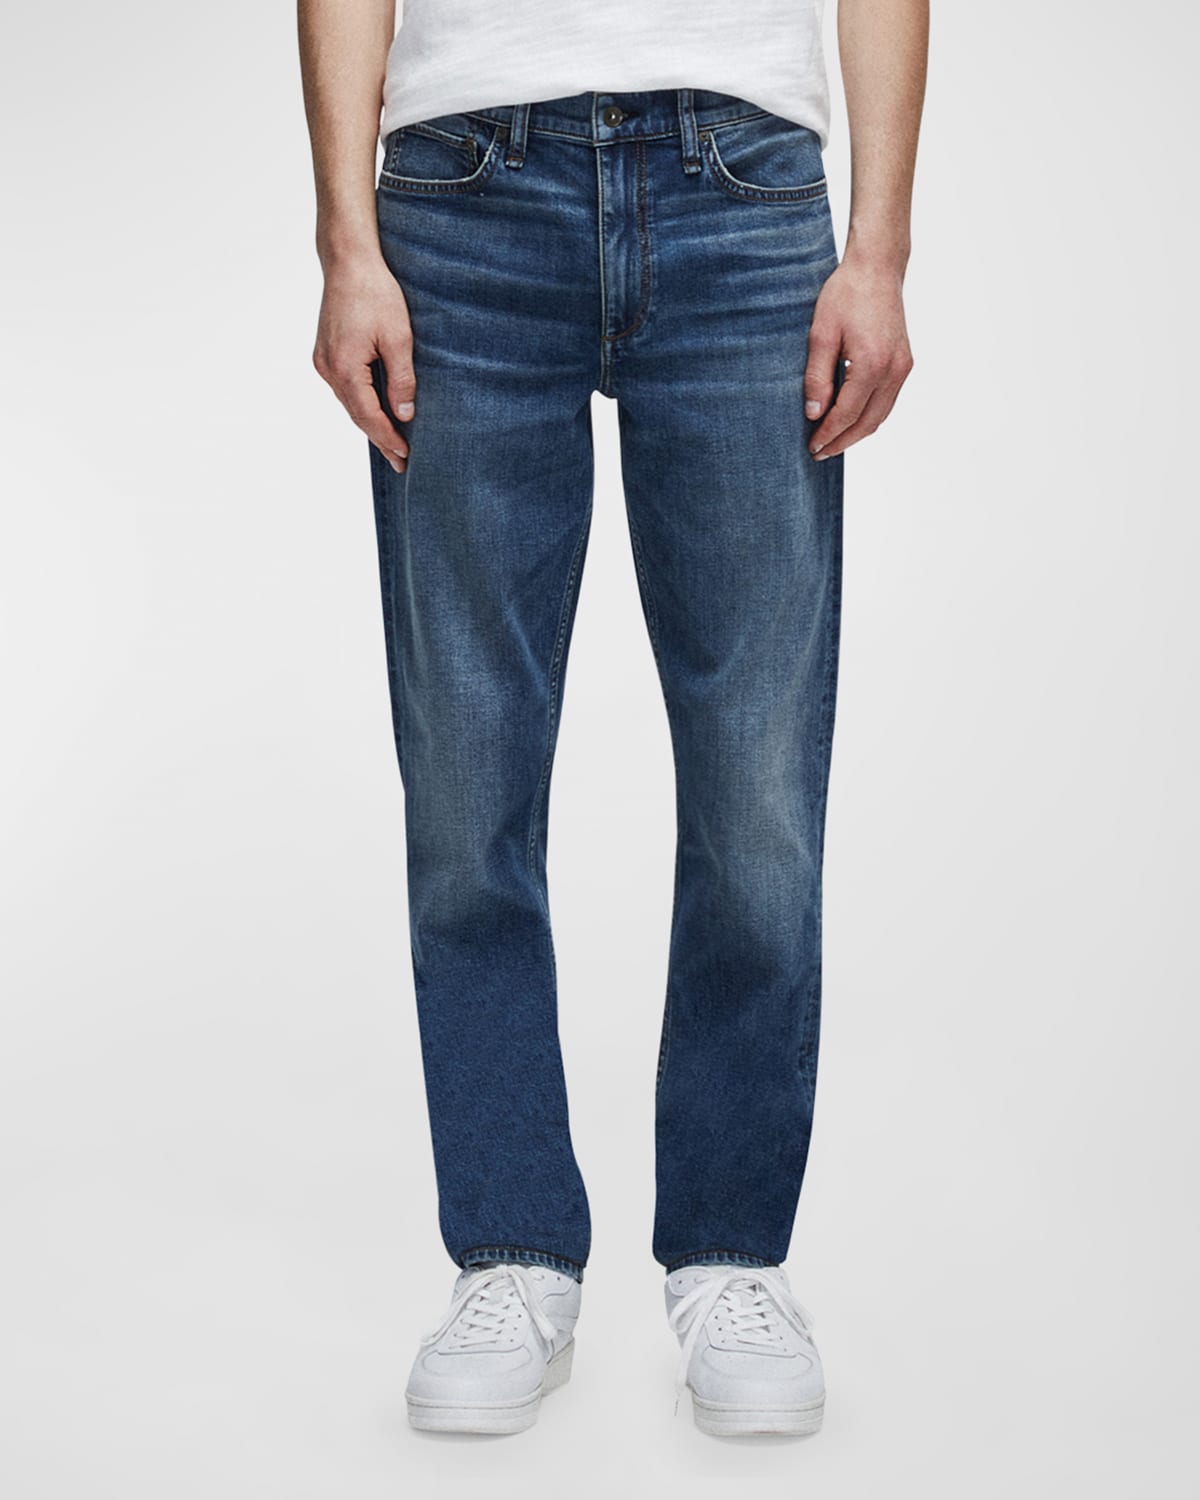 Shop Rag & Bone Men's Fit 2 Authentic Stretch Jeans In Jared